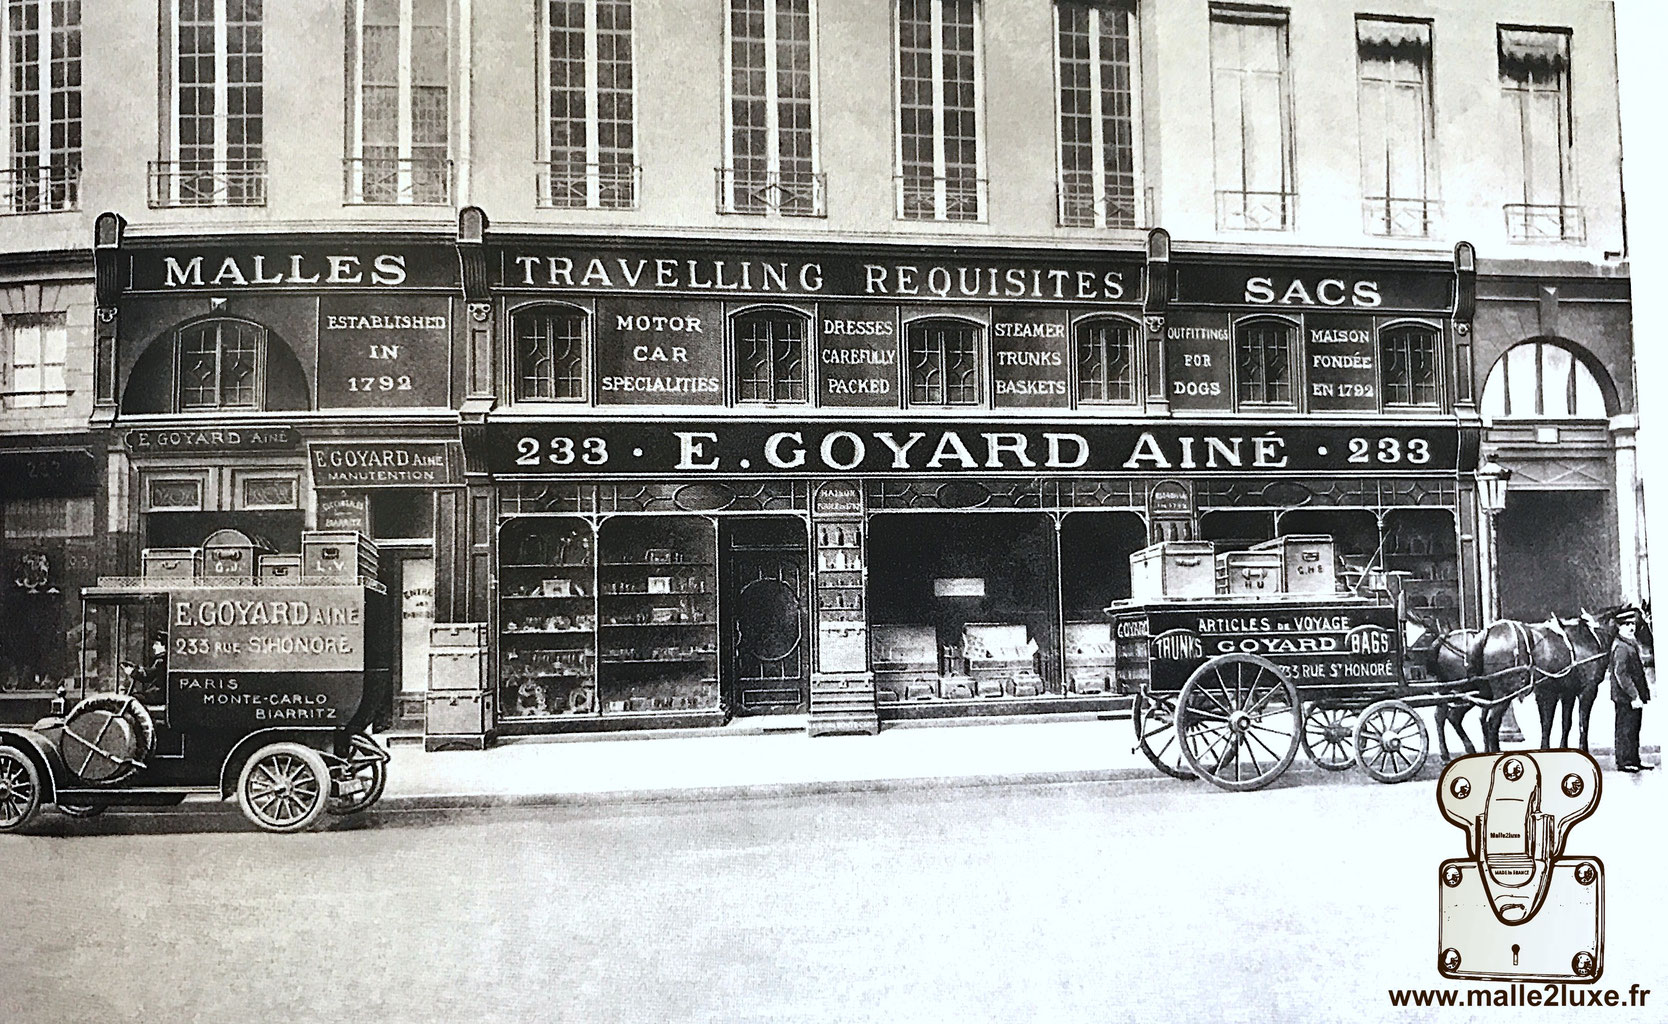 History of Goyard